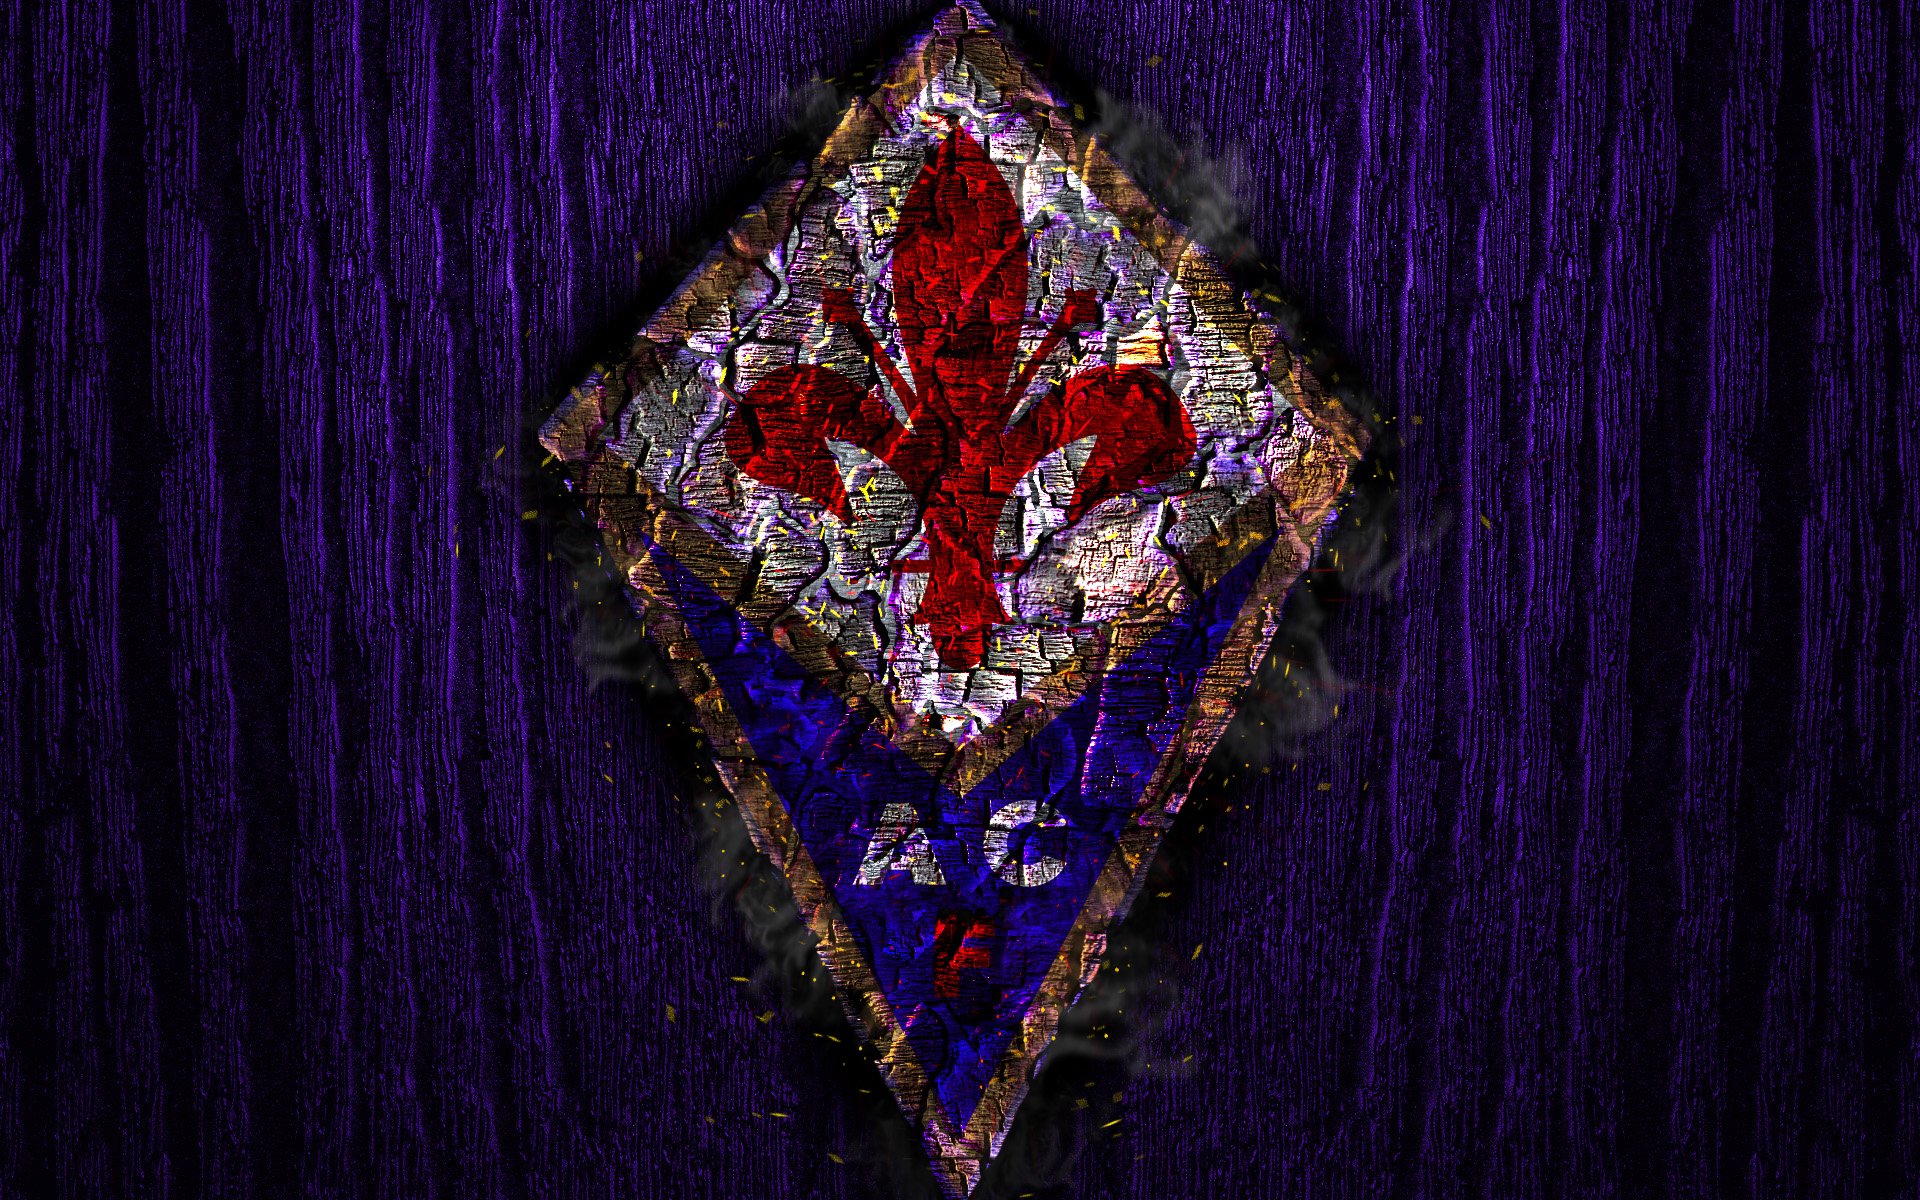 Acf Fiorentina HD Wallpaper Background Image